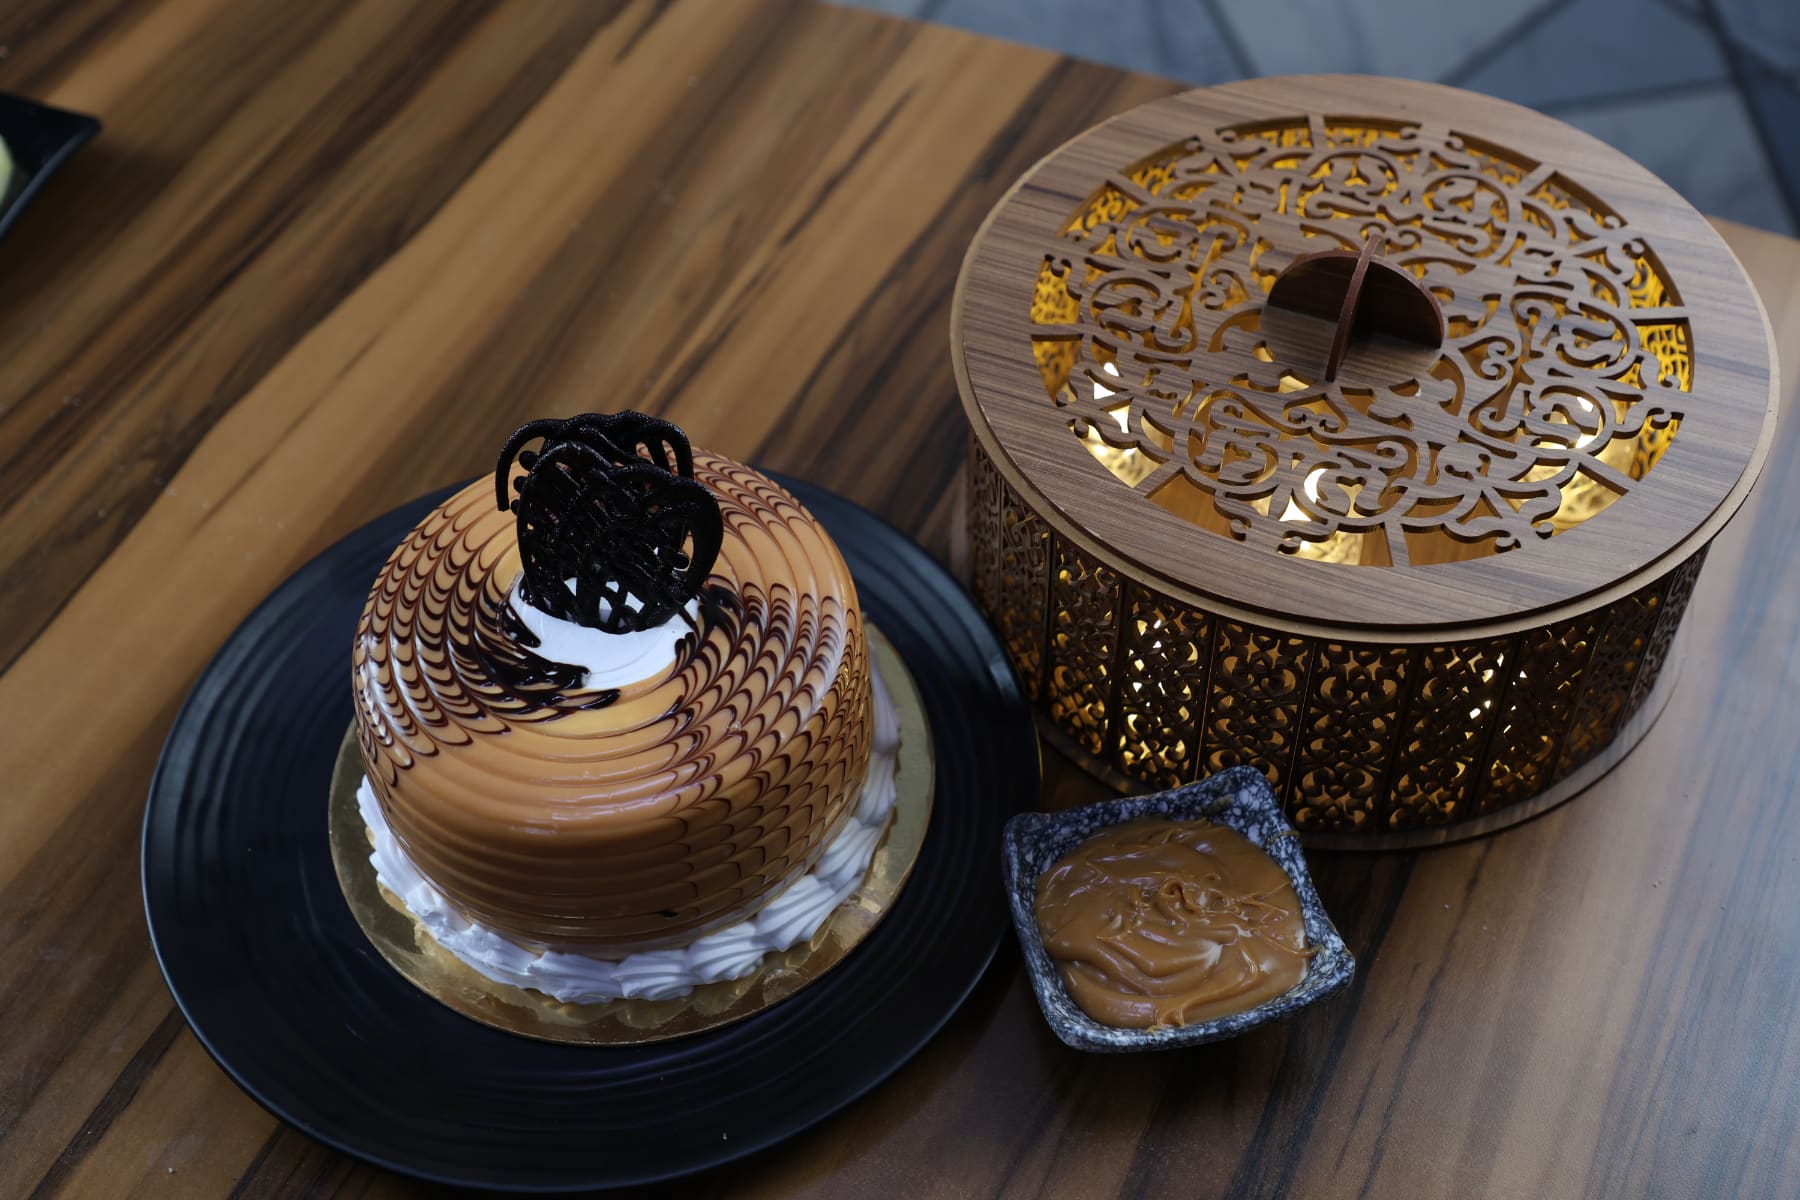 Home made cake design ideas home Bekars ke liye #100cakeideas design By  @KamleshKitchen - YouTube